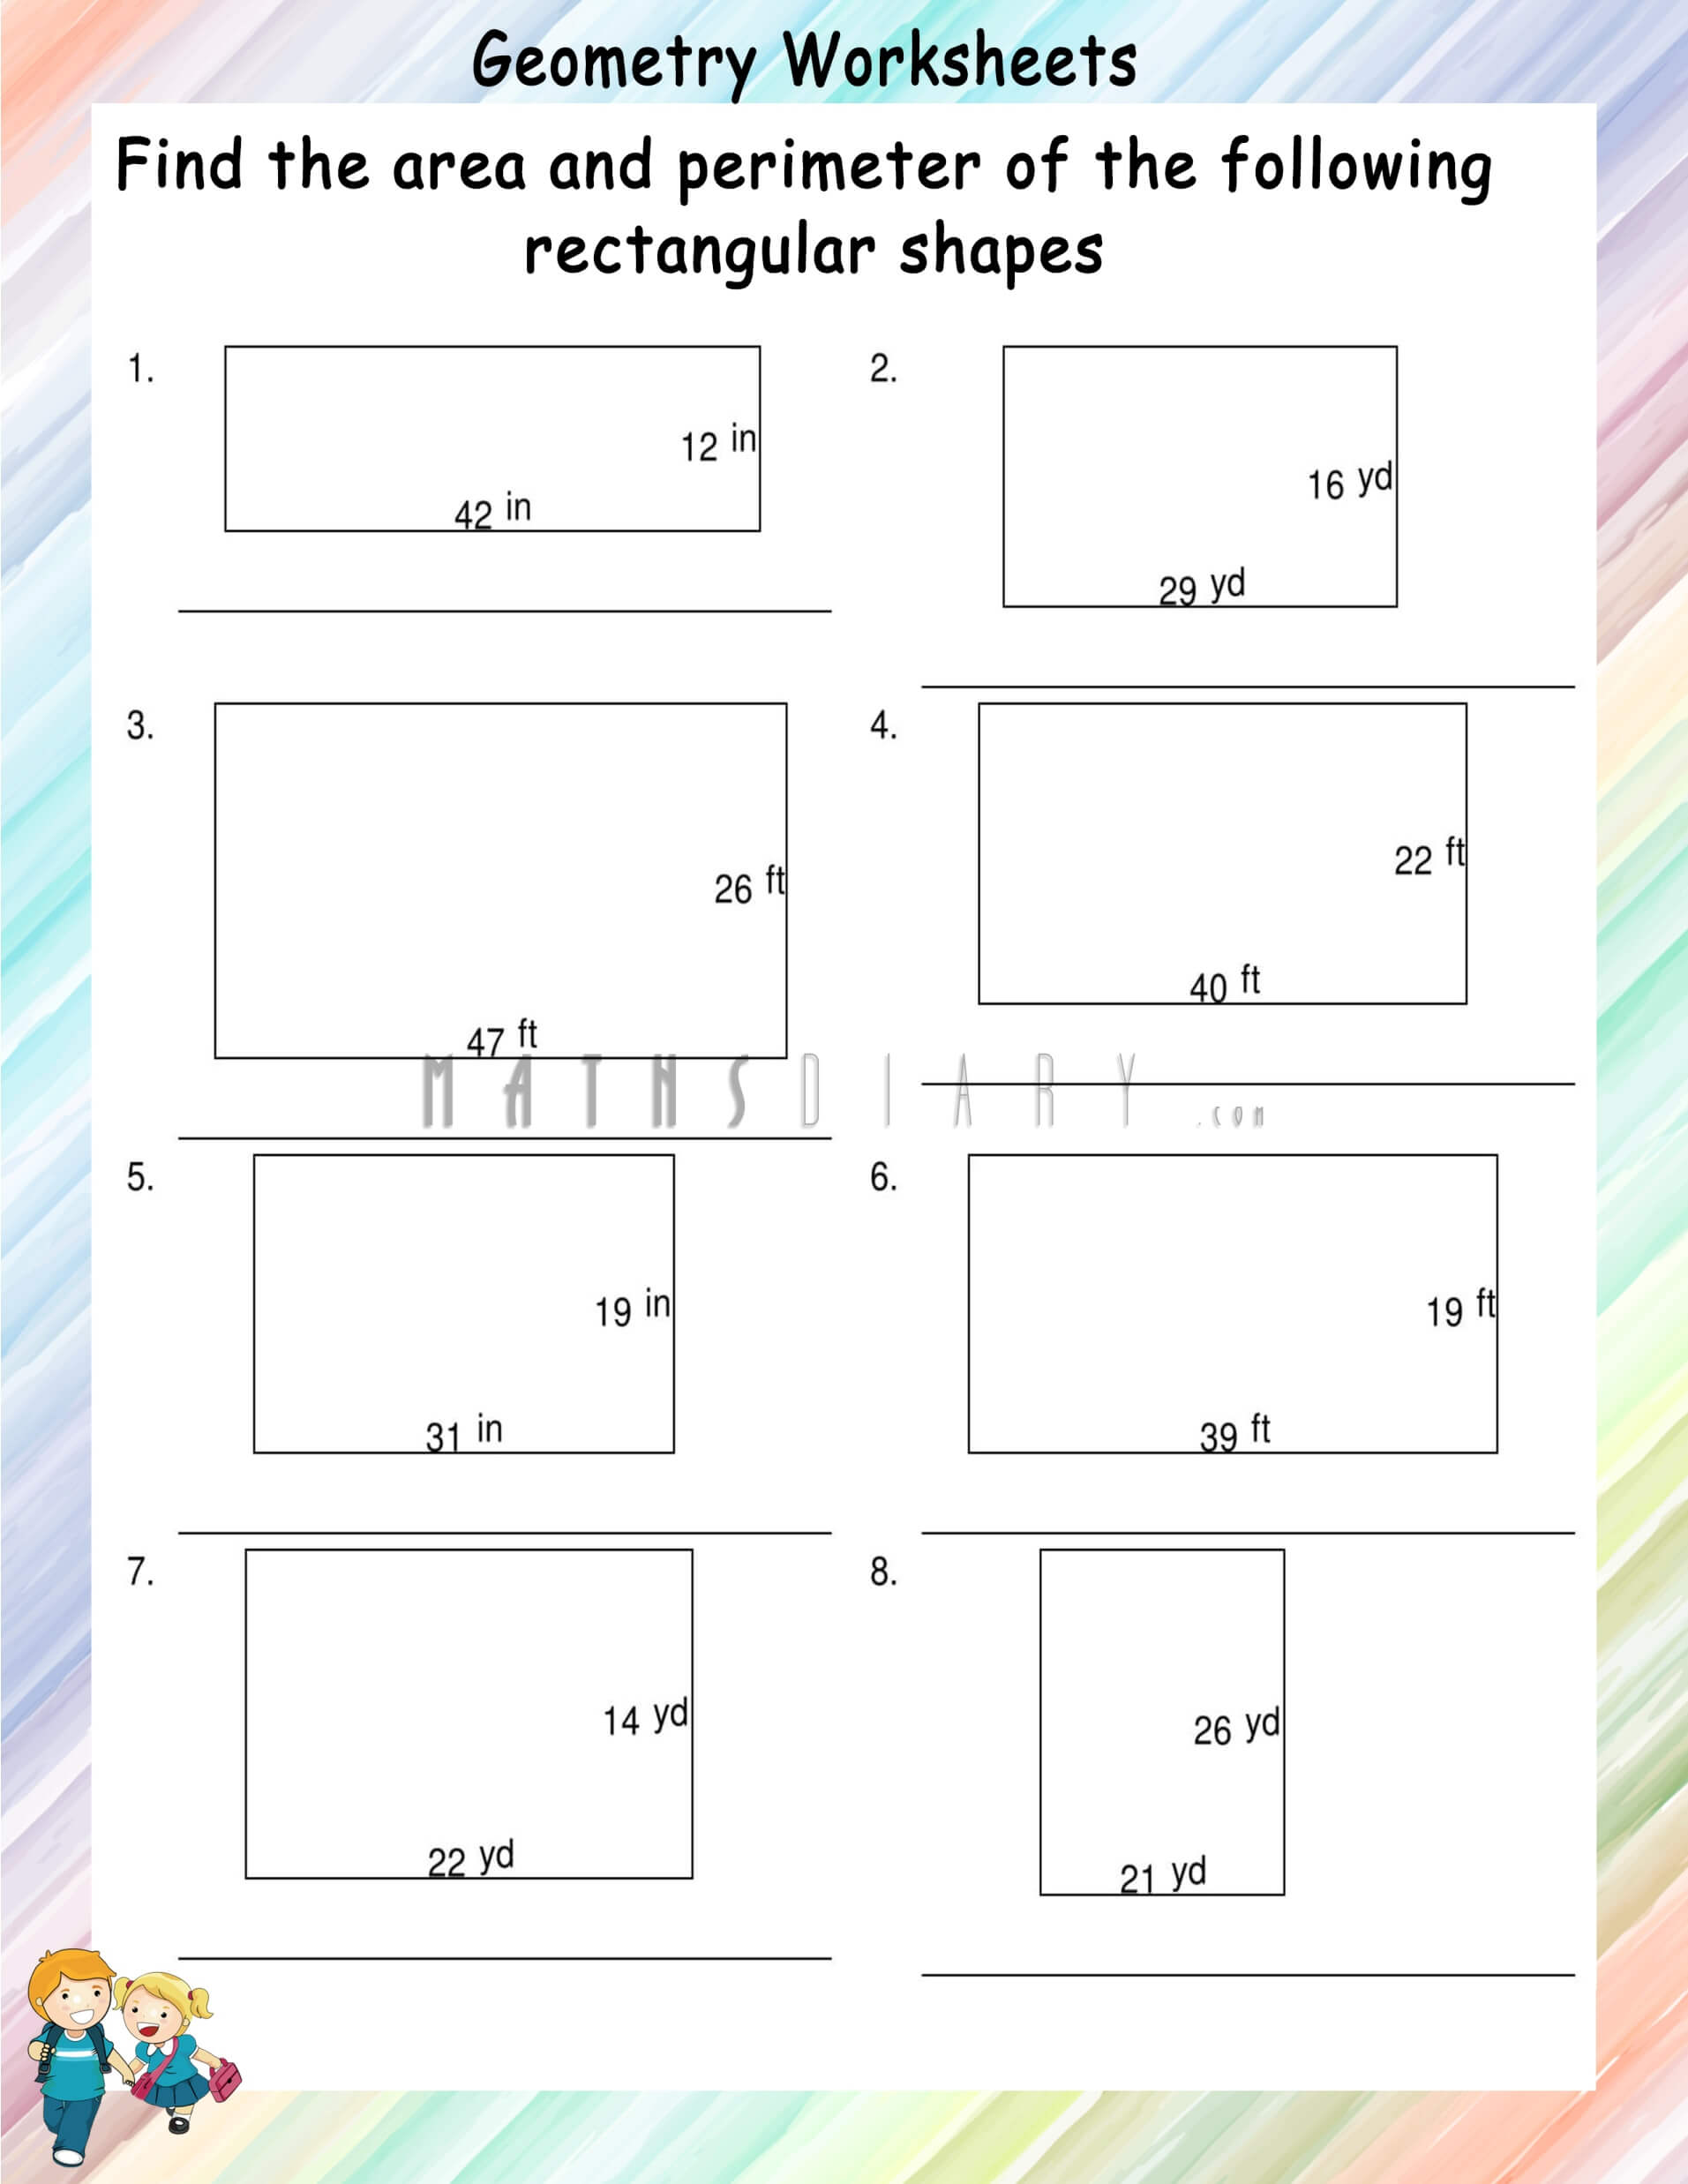 perimeter-of-a-rectangle-worksheet